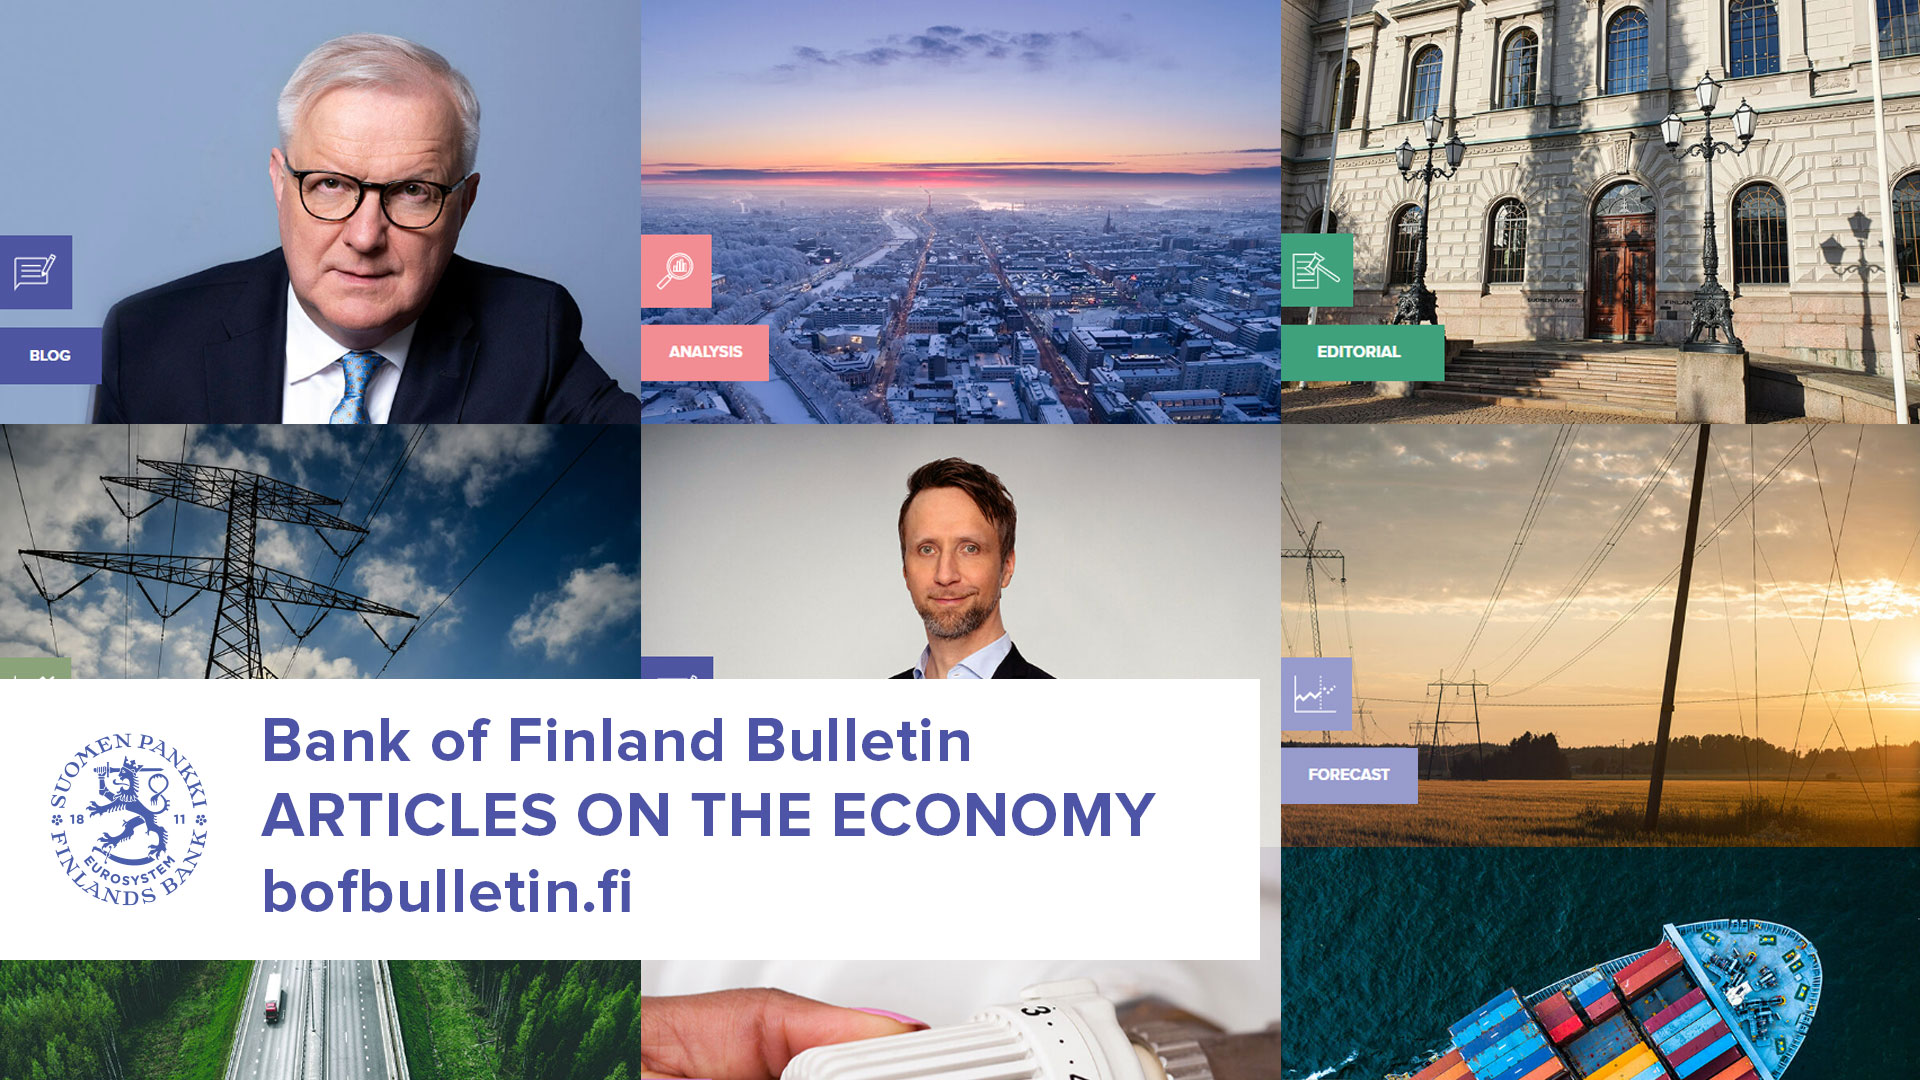 Bank of Finland Bulletin website